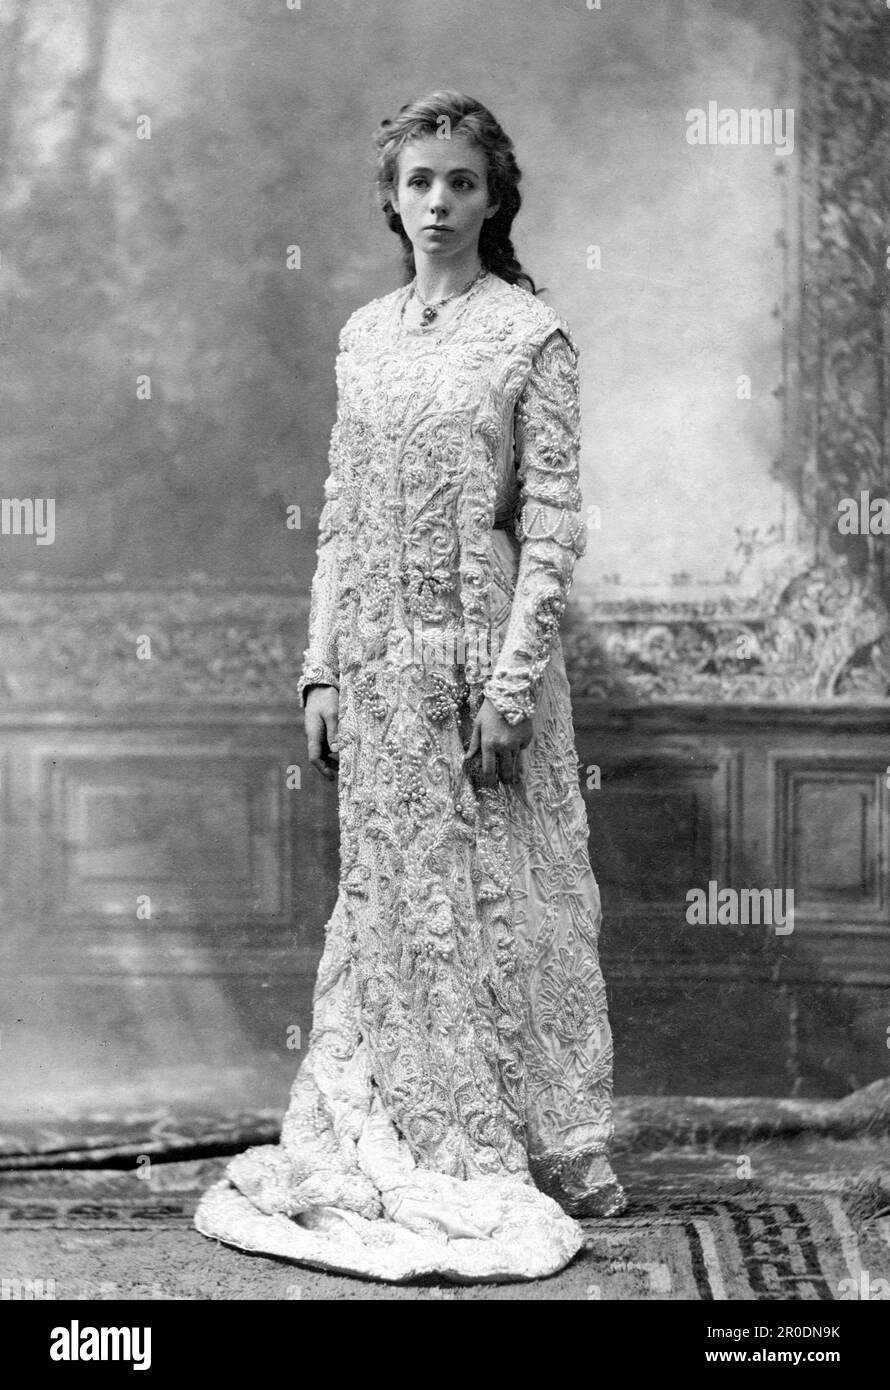 Maude Adams als Julia. Porträt der amerikanischen Schauspielerin, die Peter Pan spielte, Maude Ewing Adams Kiskadden (1872-1953), 1899 Stockfoto